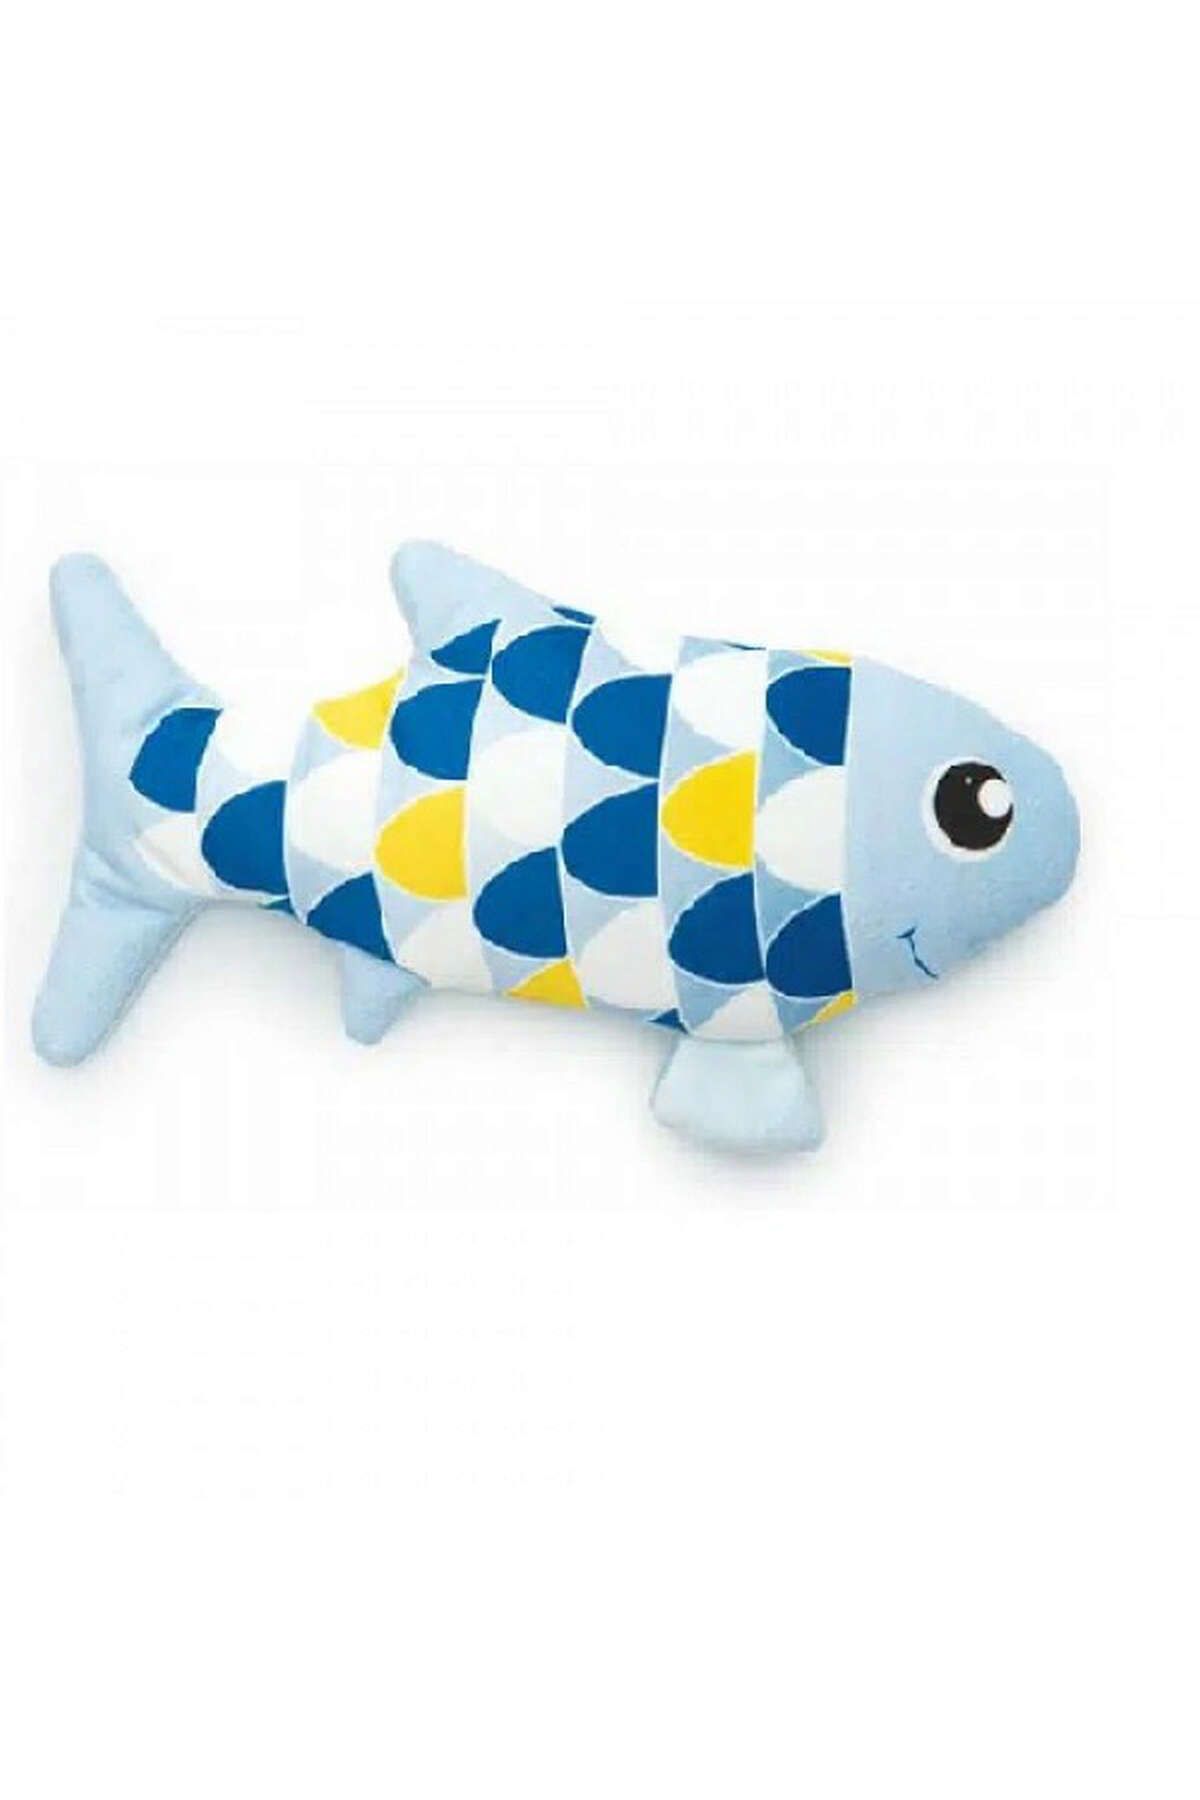 Hagen Catit Groovy Fish Catnipli Kedi Oyuncağı, Mavi 353067